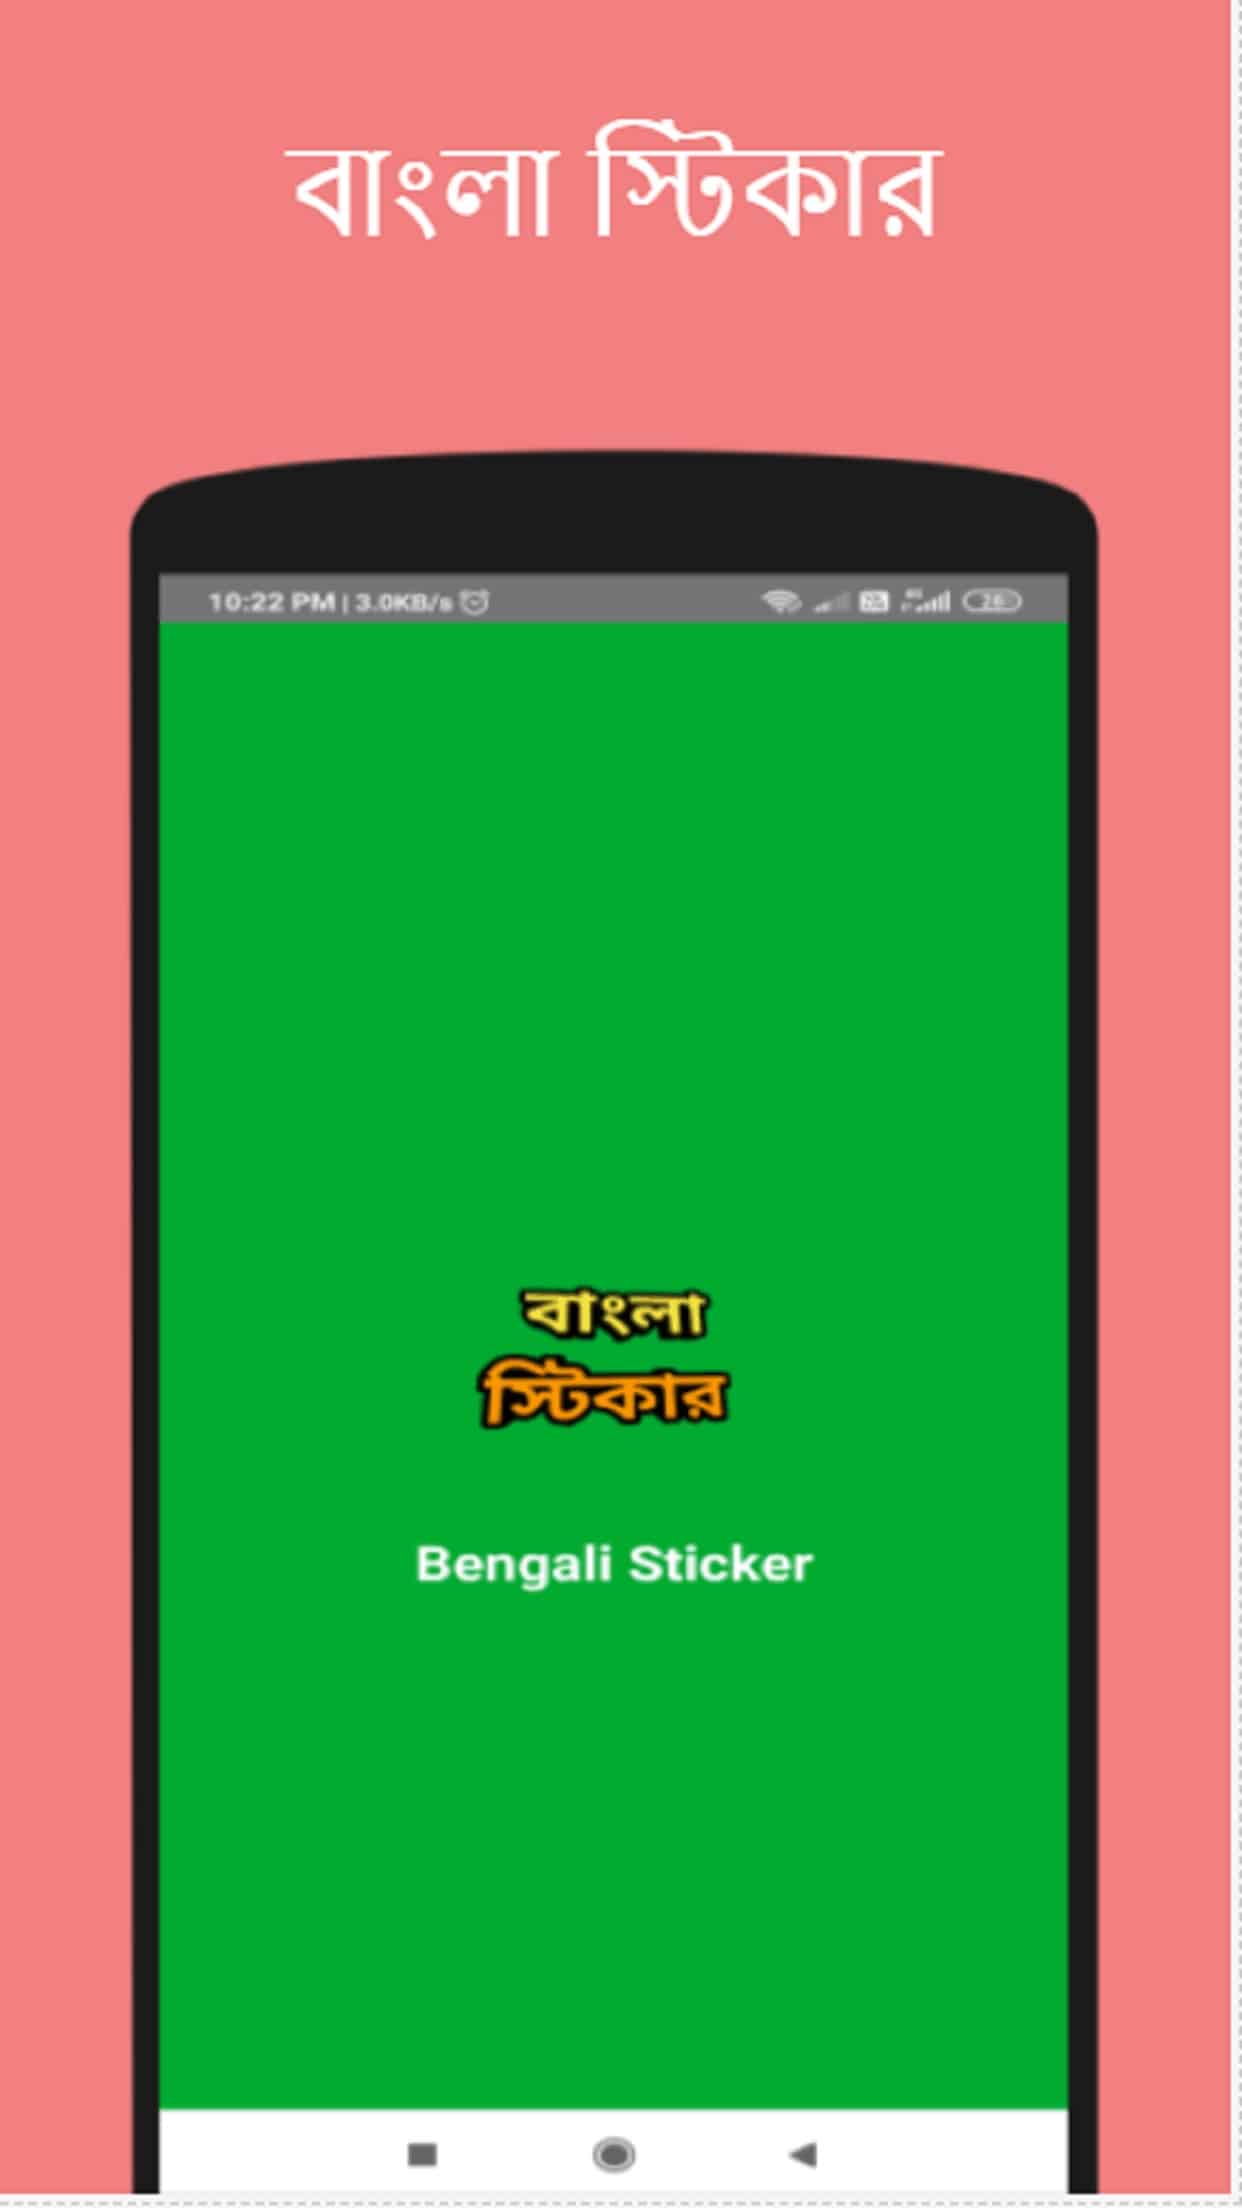 Bengali Sticker